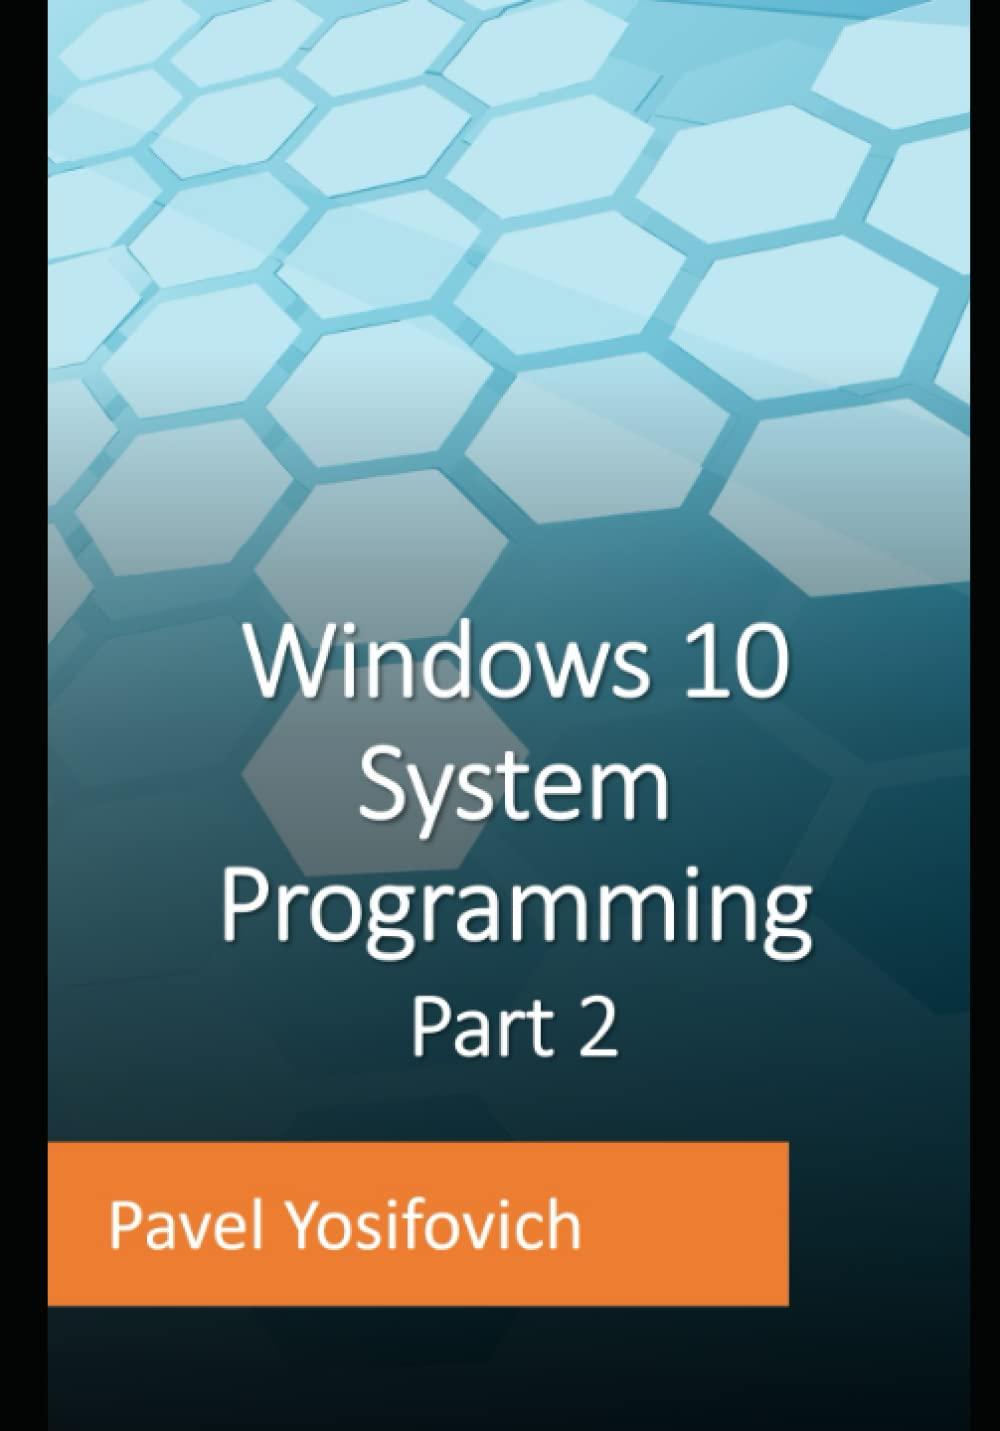 windows 10 system programming part 2 1st edition pavel yosifovich ? b09gjkkbzp, 979-8480026320